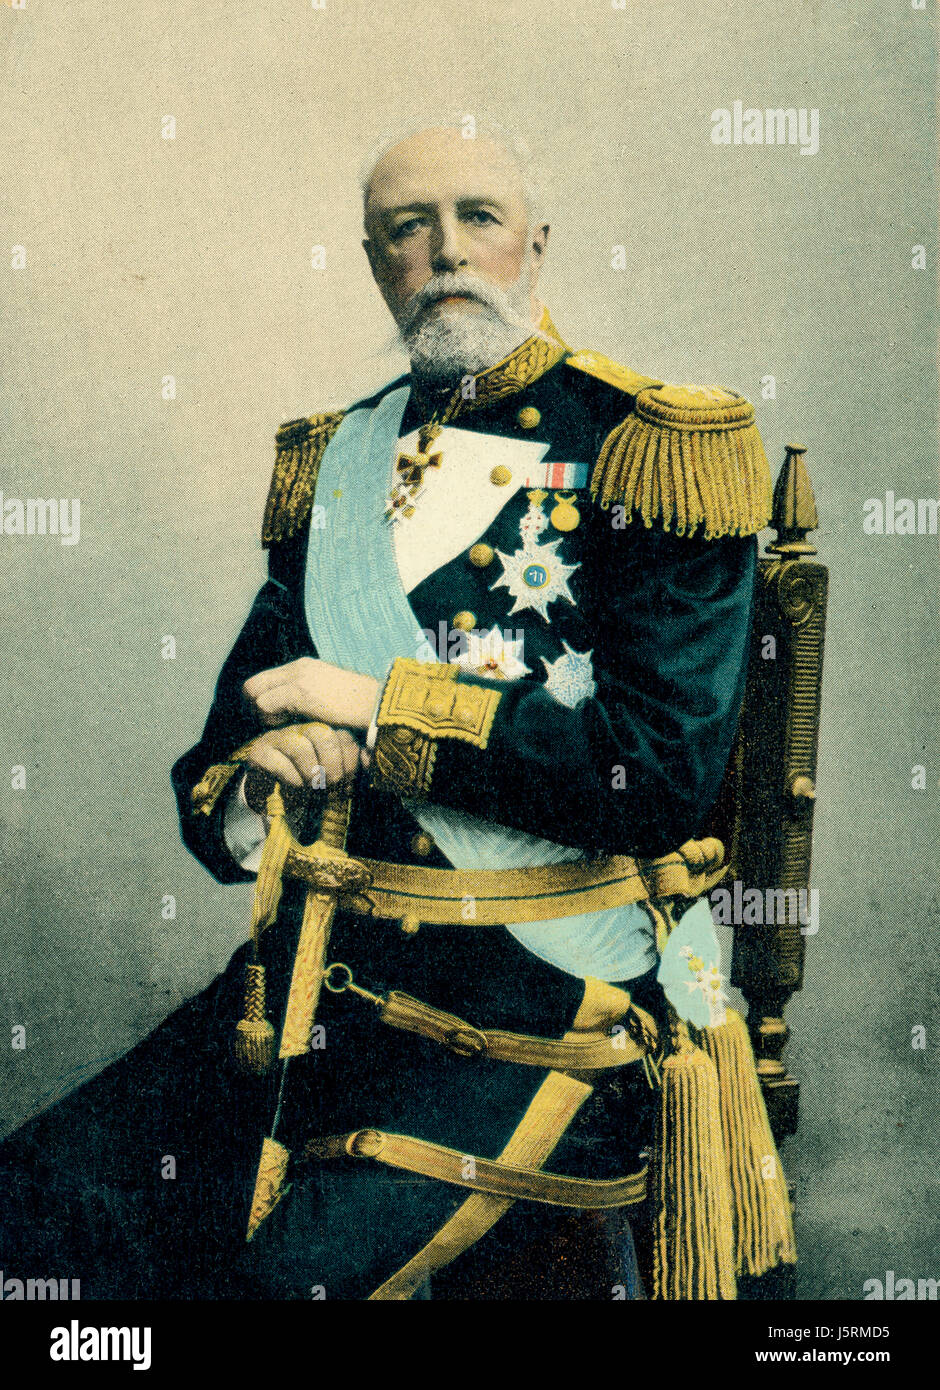 Oscar II (1829-107), King of Sweden 1872-1907, Portrait, 1900 Stock Photo